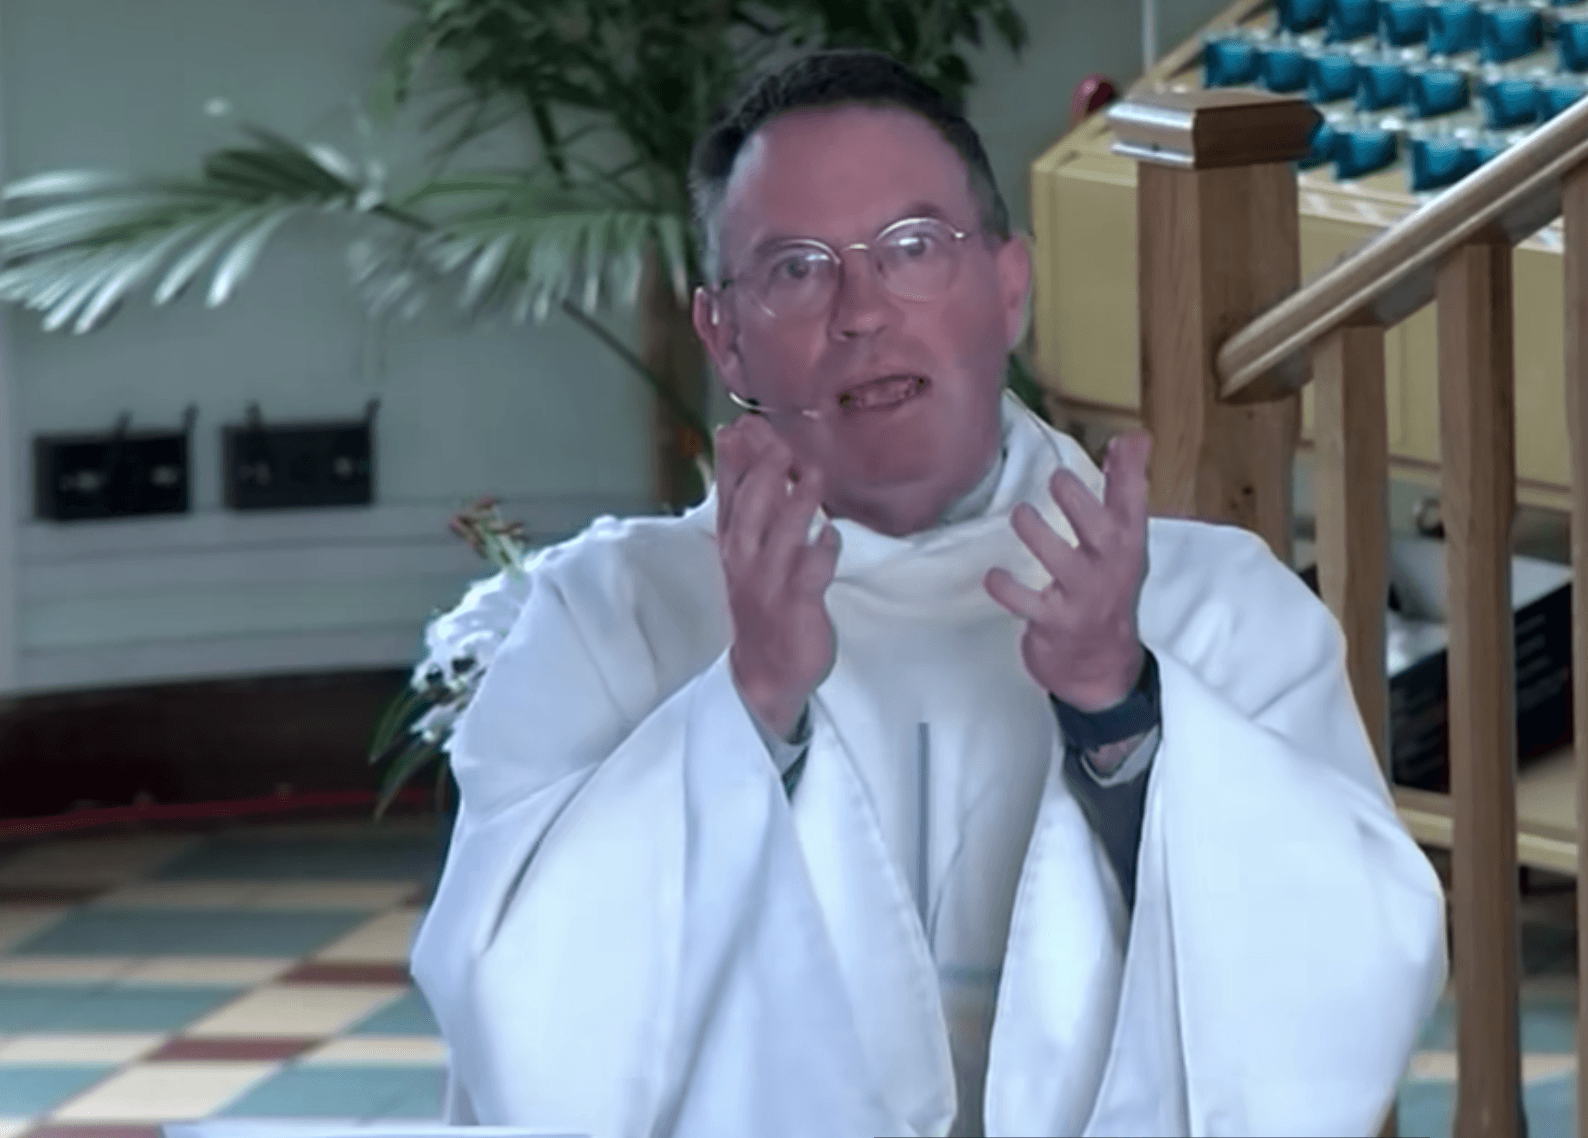 HOMILY: Fr Martin Magill addressing the webcam on Saturday night